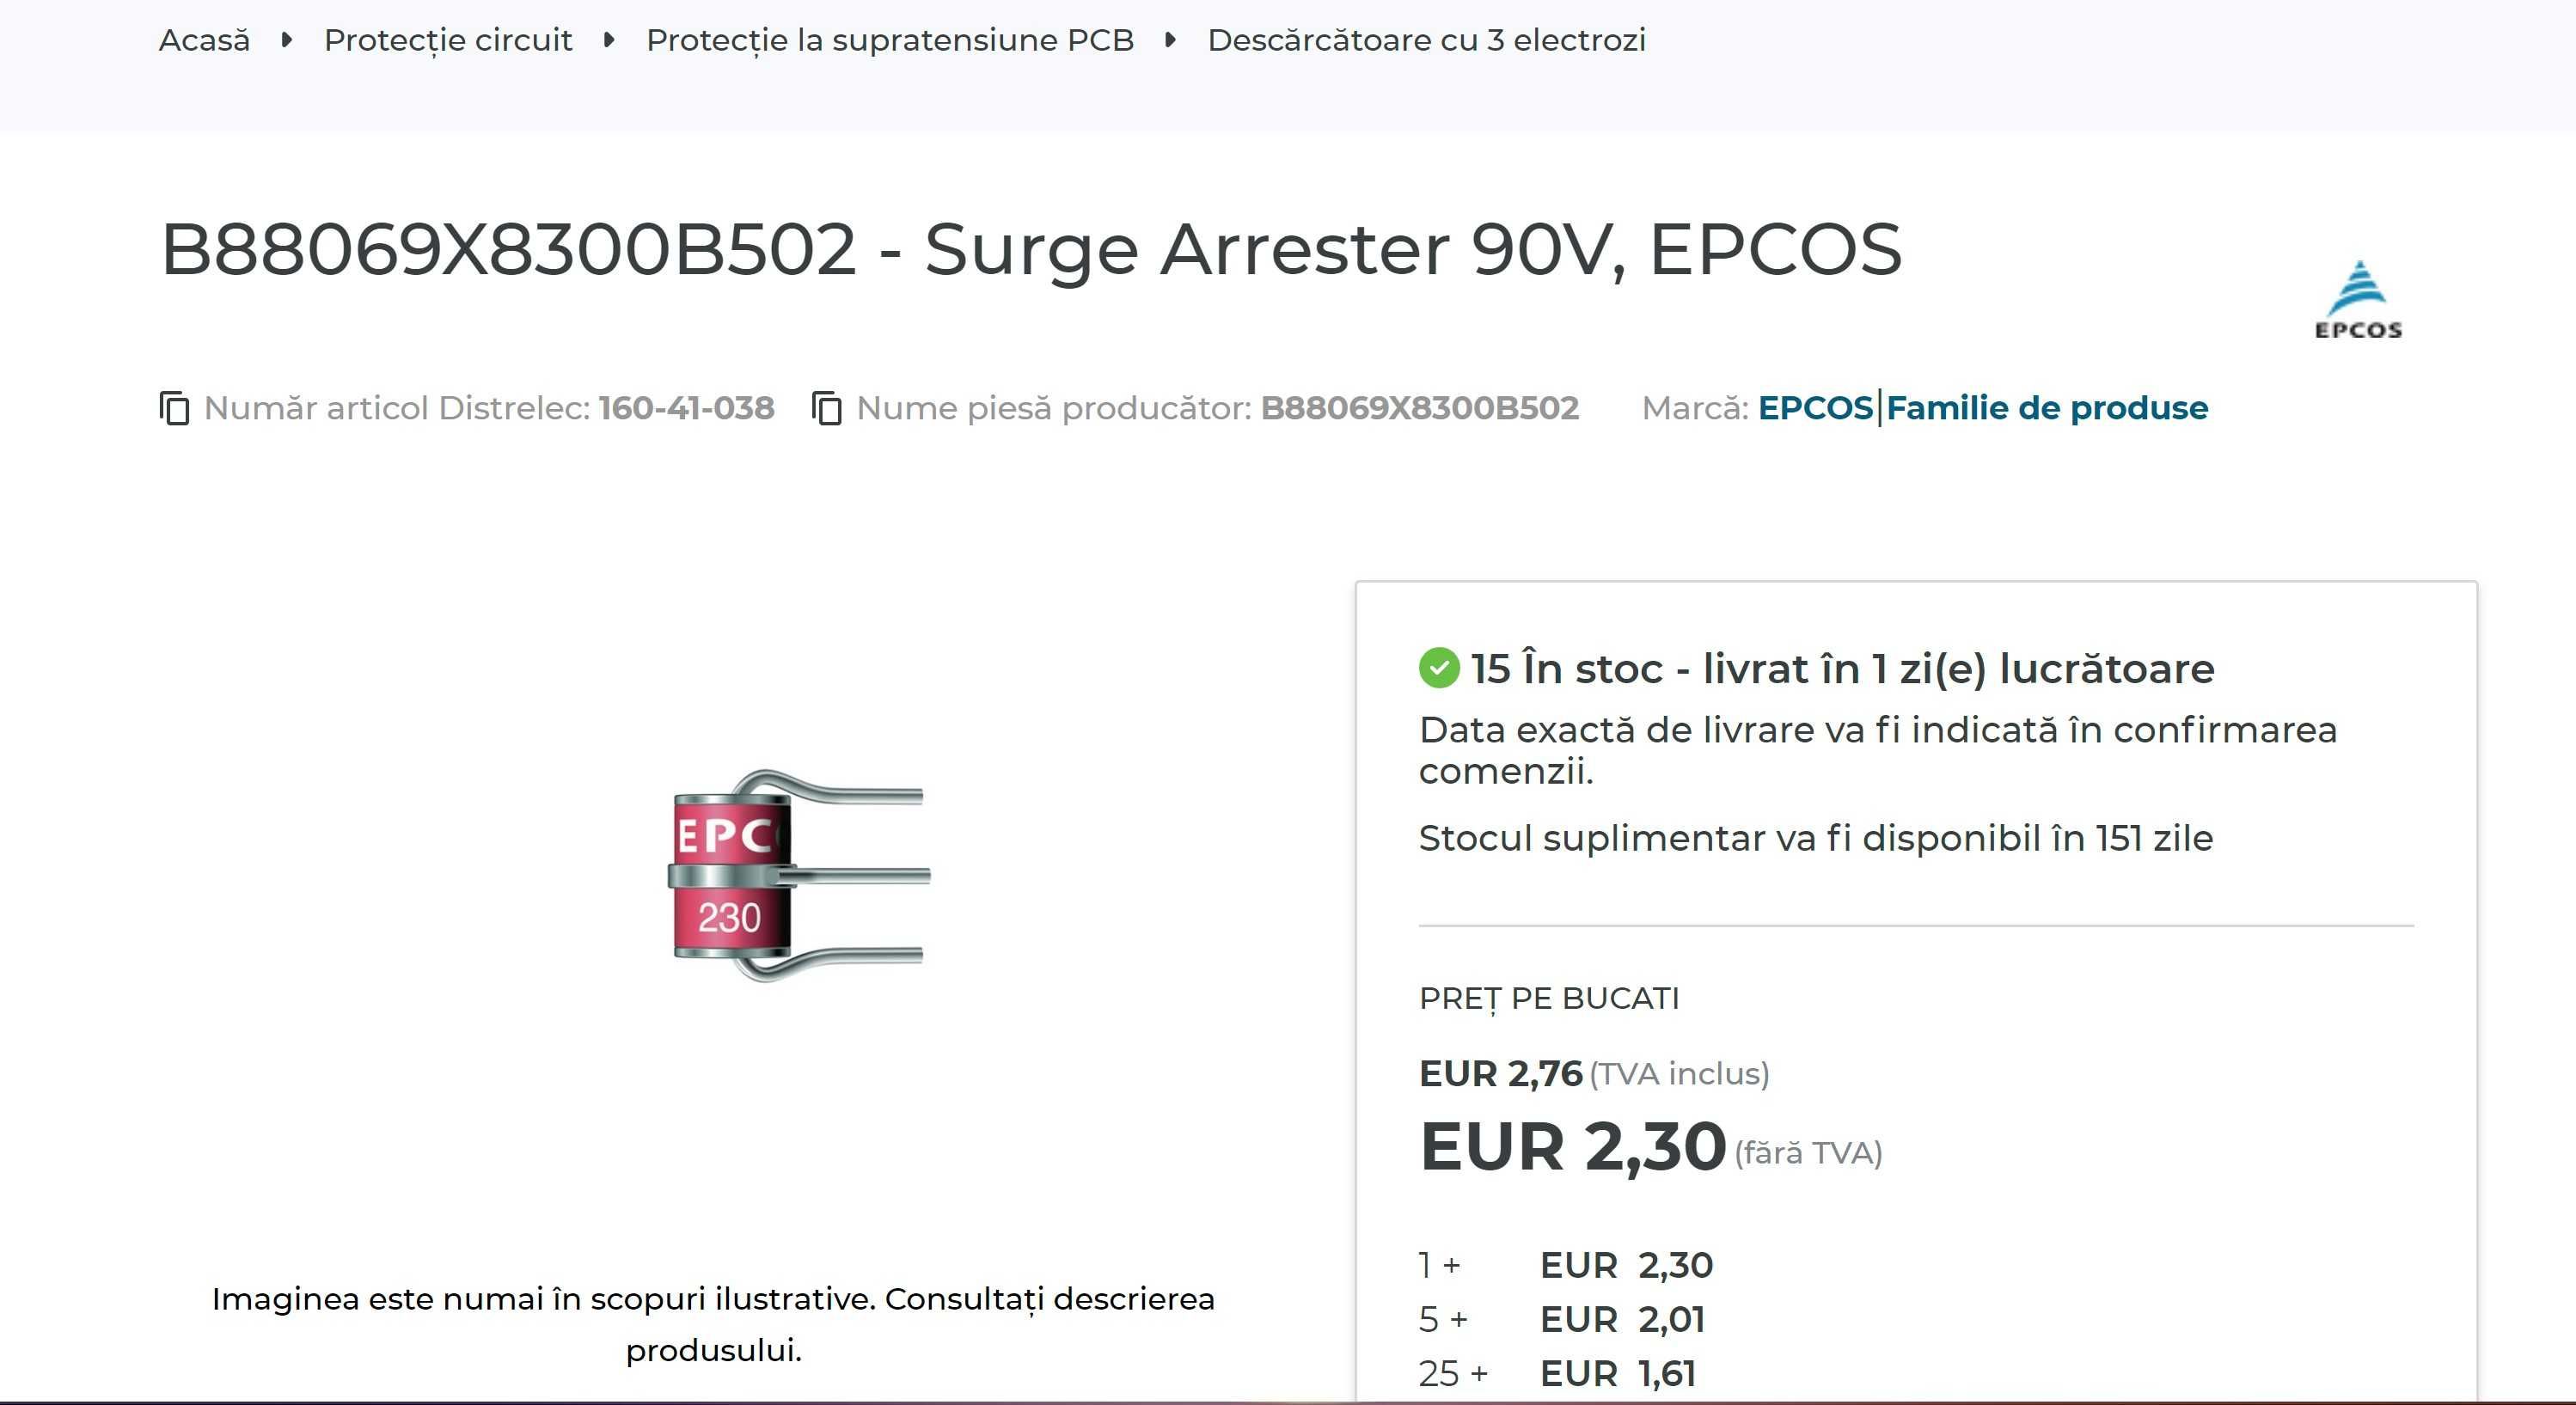 B88069X8300B502 Surge Arrester 90V, EPCOS/SIEMENS descarcator 3 electr